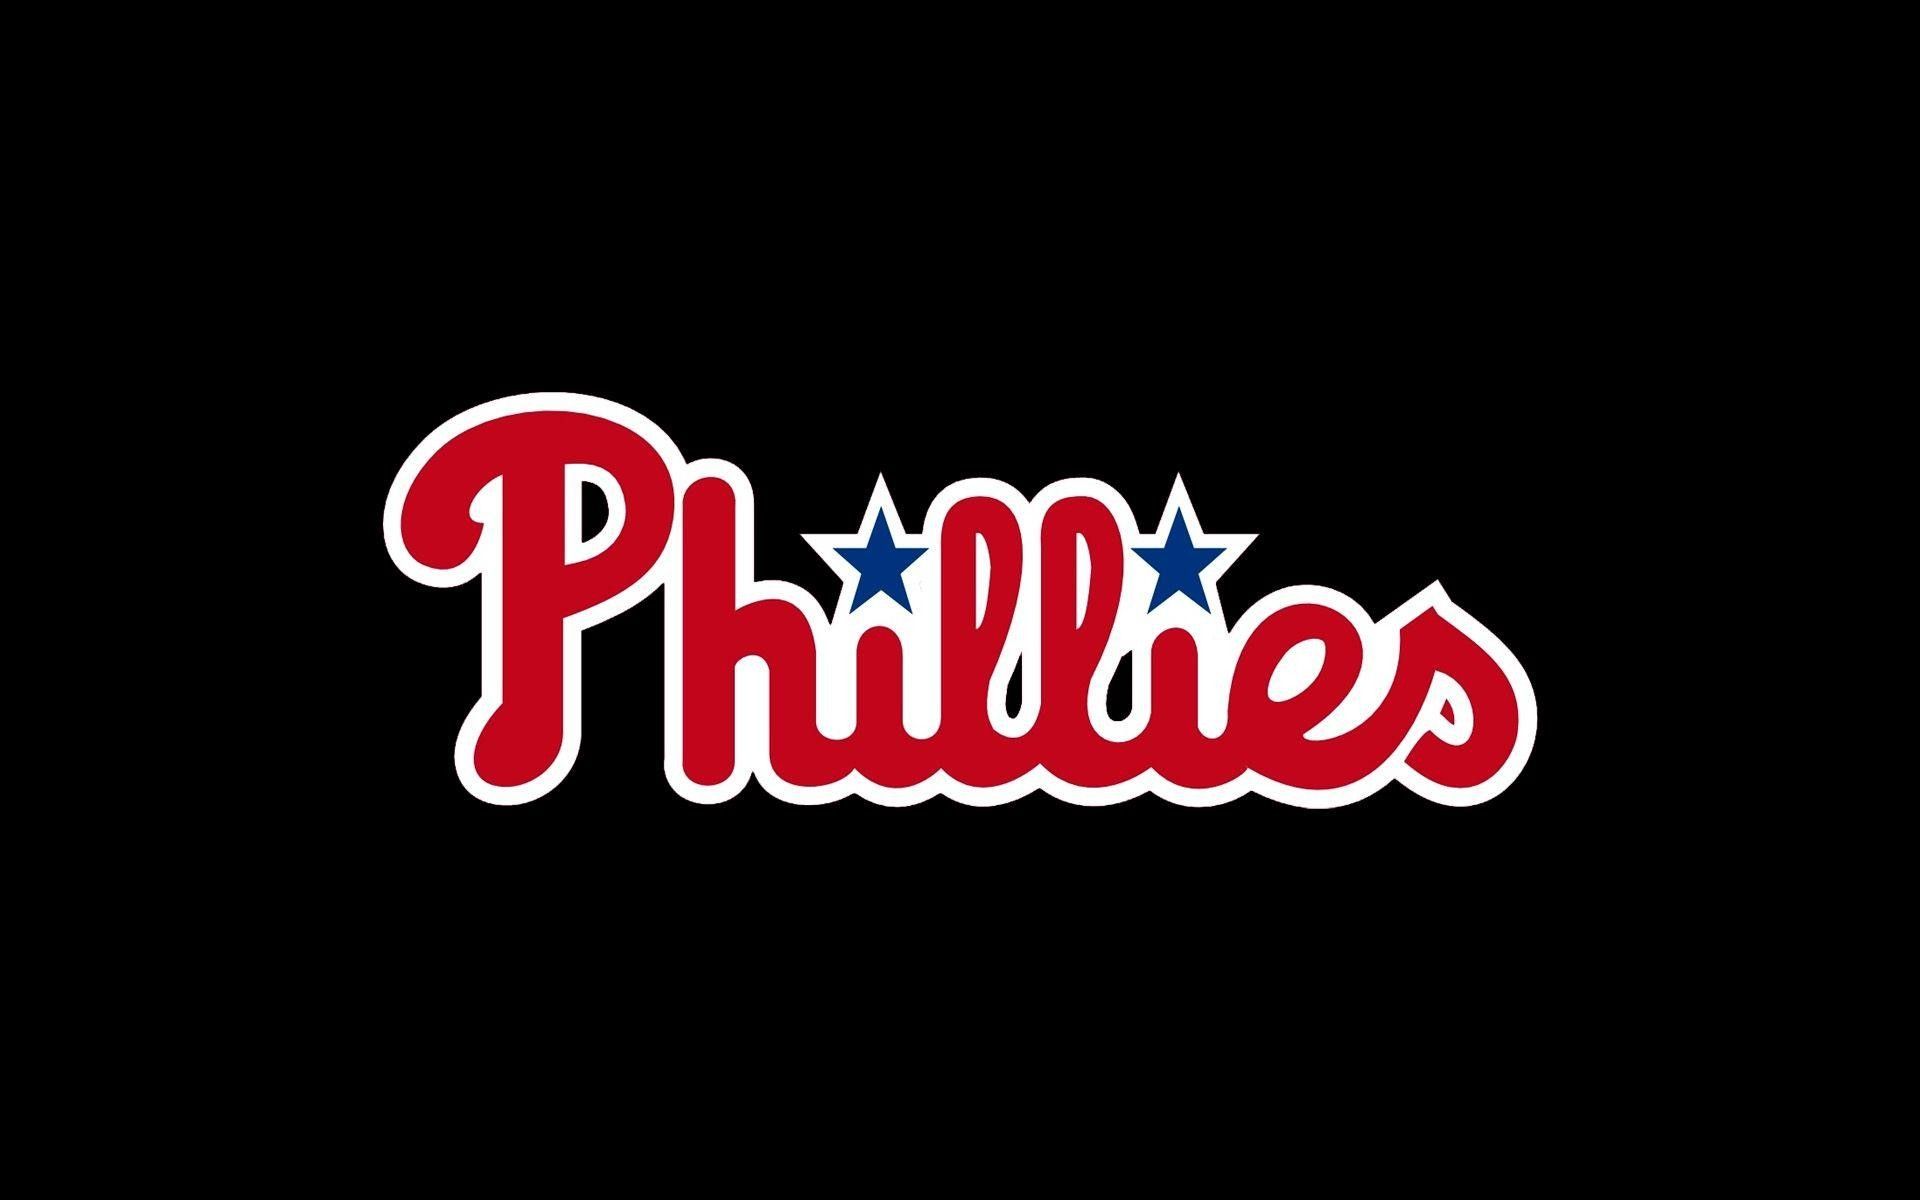 2022 Philadelphia Phillies Wallpapers - Wallpaper Cave